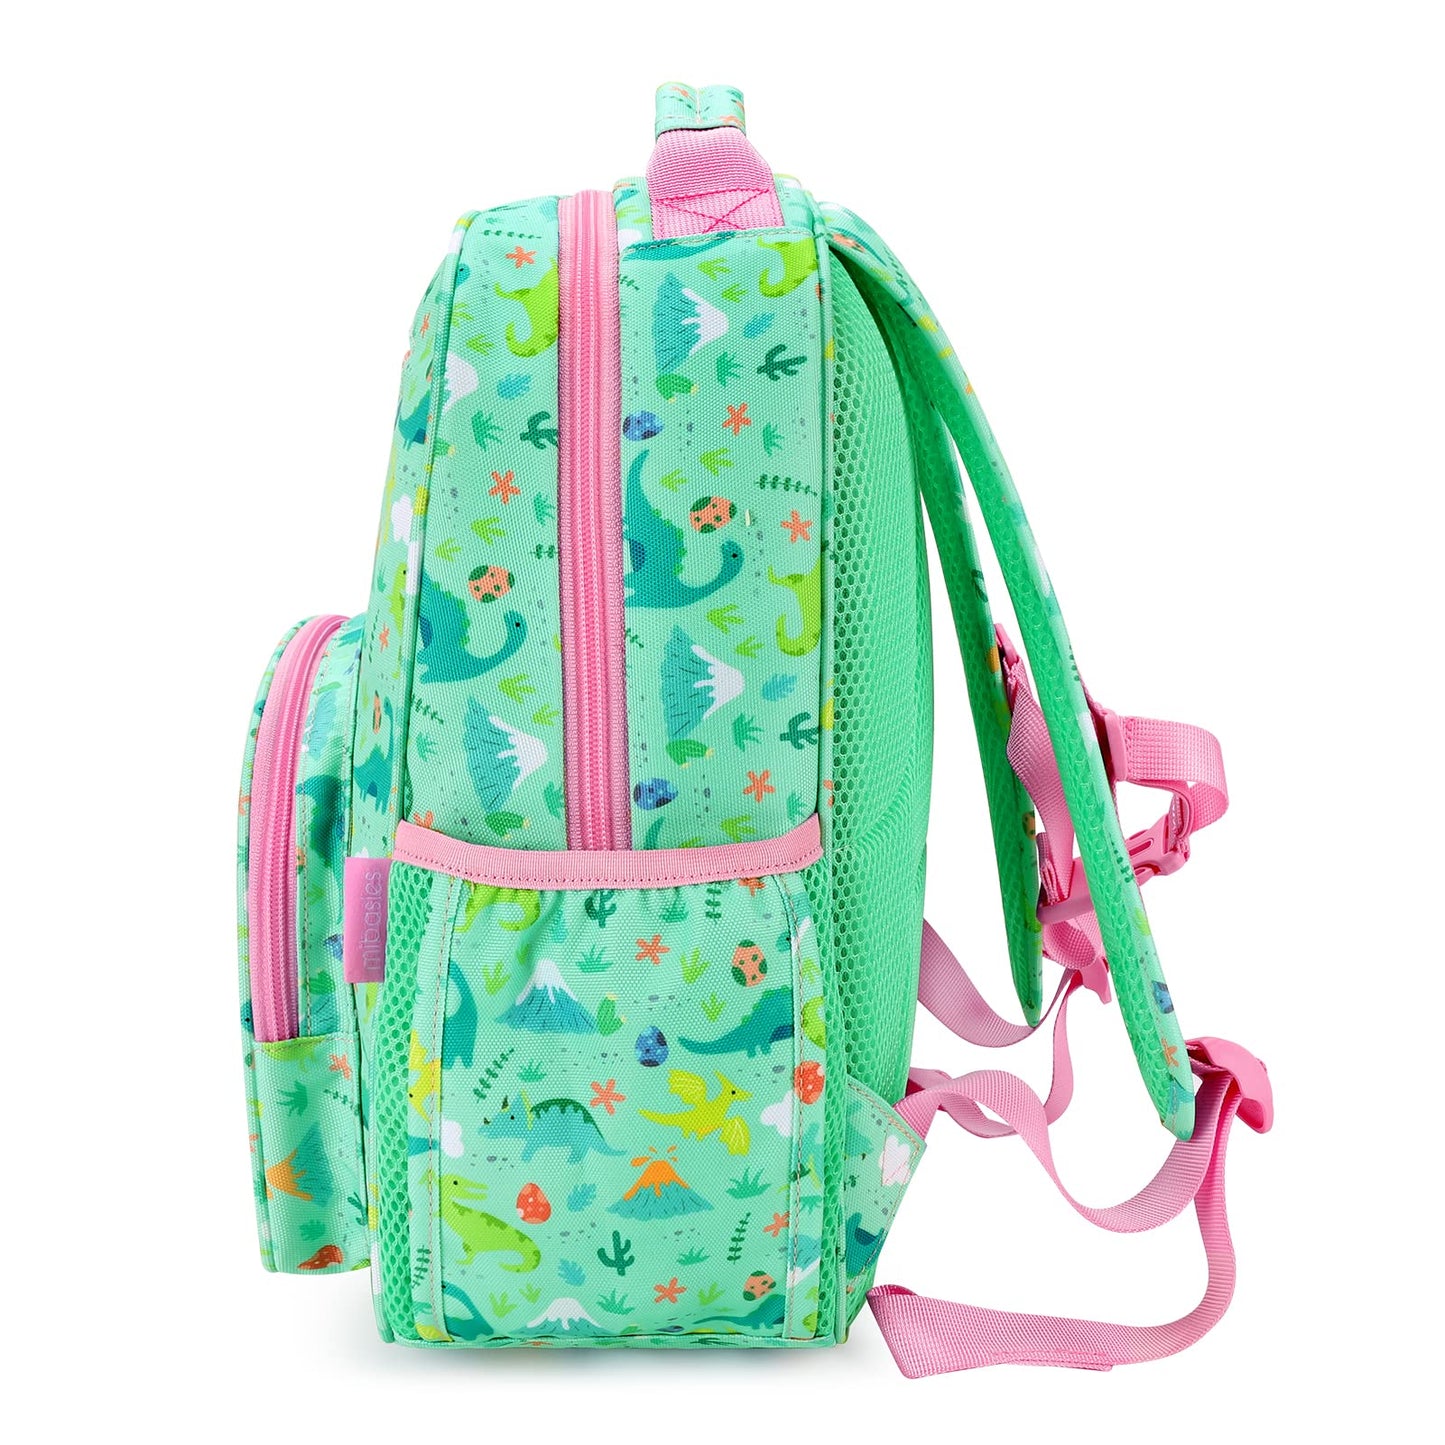 FUN FOR SPRING schoolbag Mibasies 